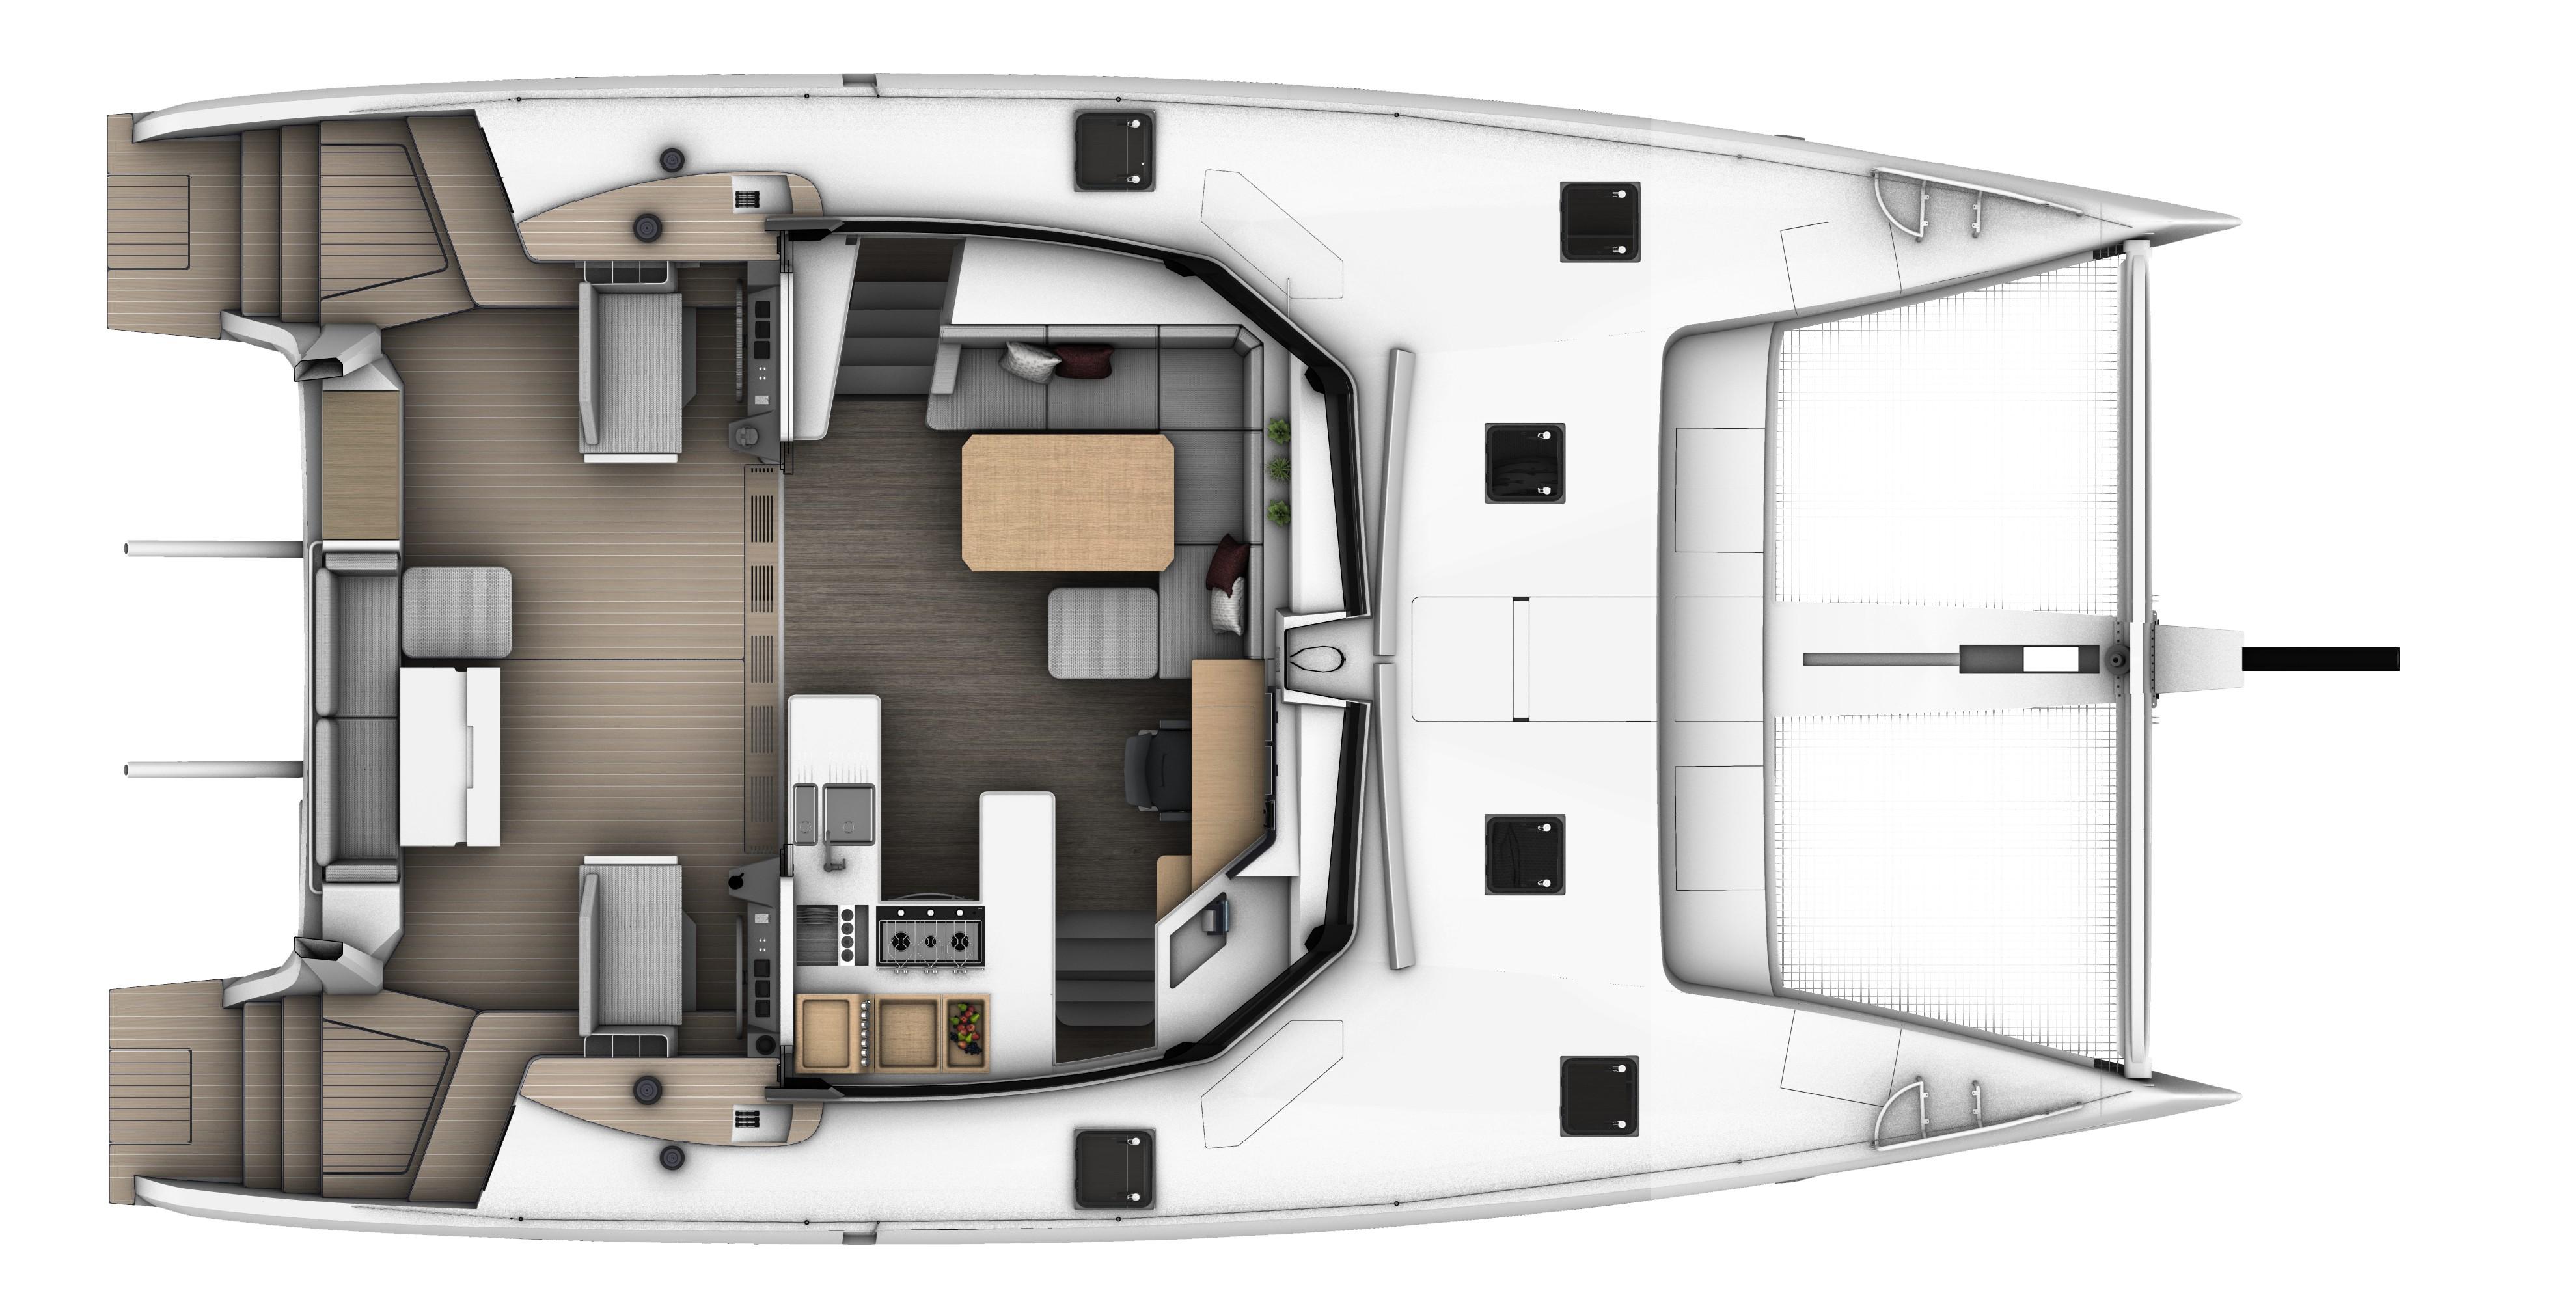 SEAWIND 1370 cockpit salon layout